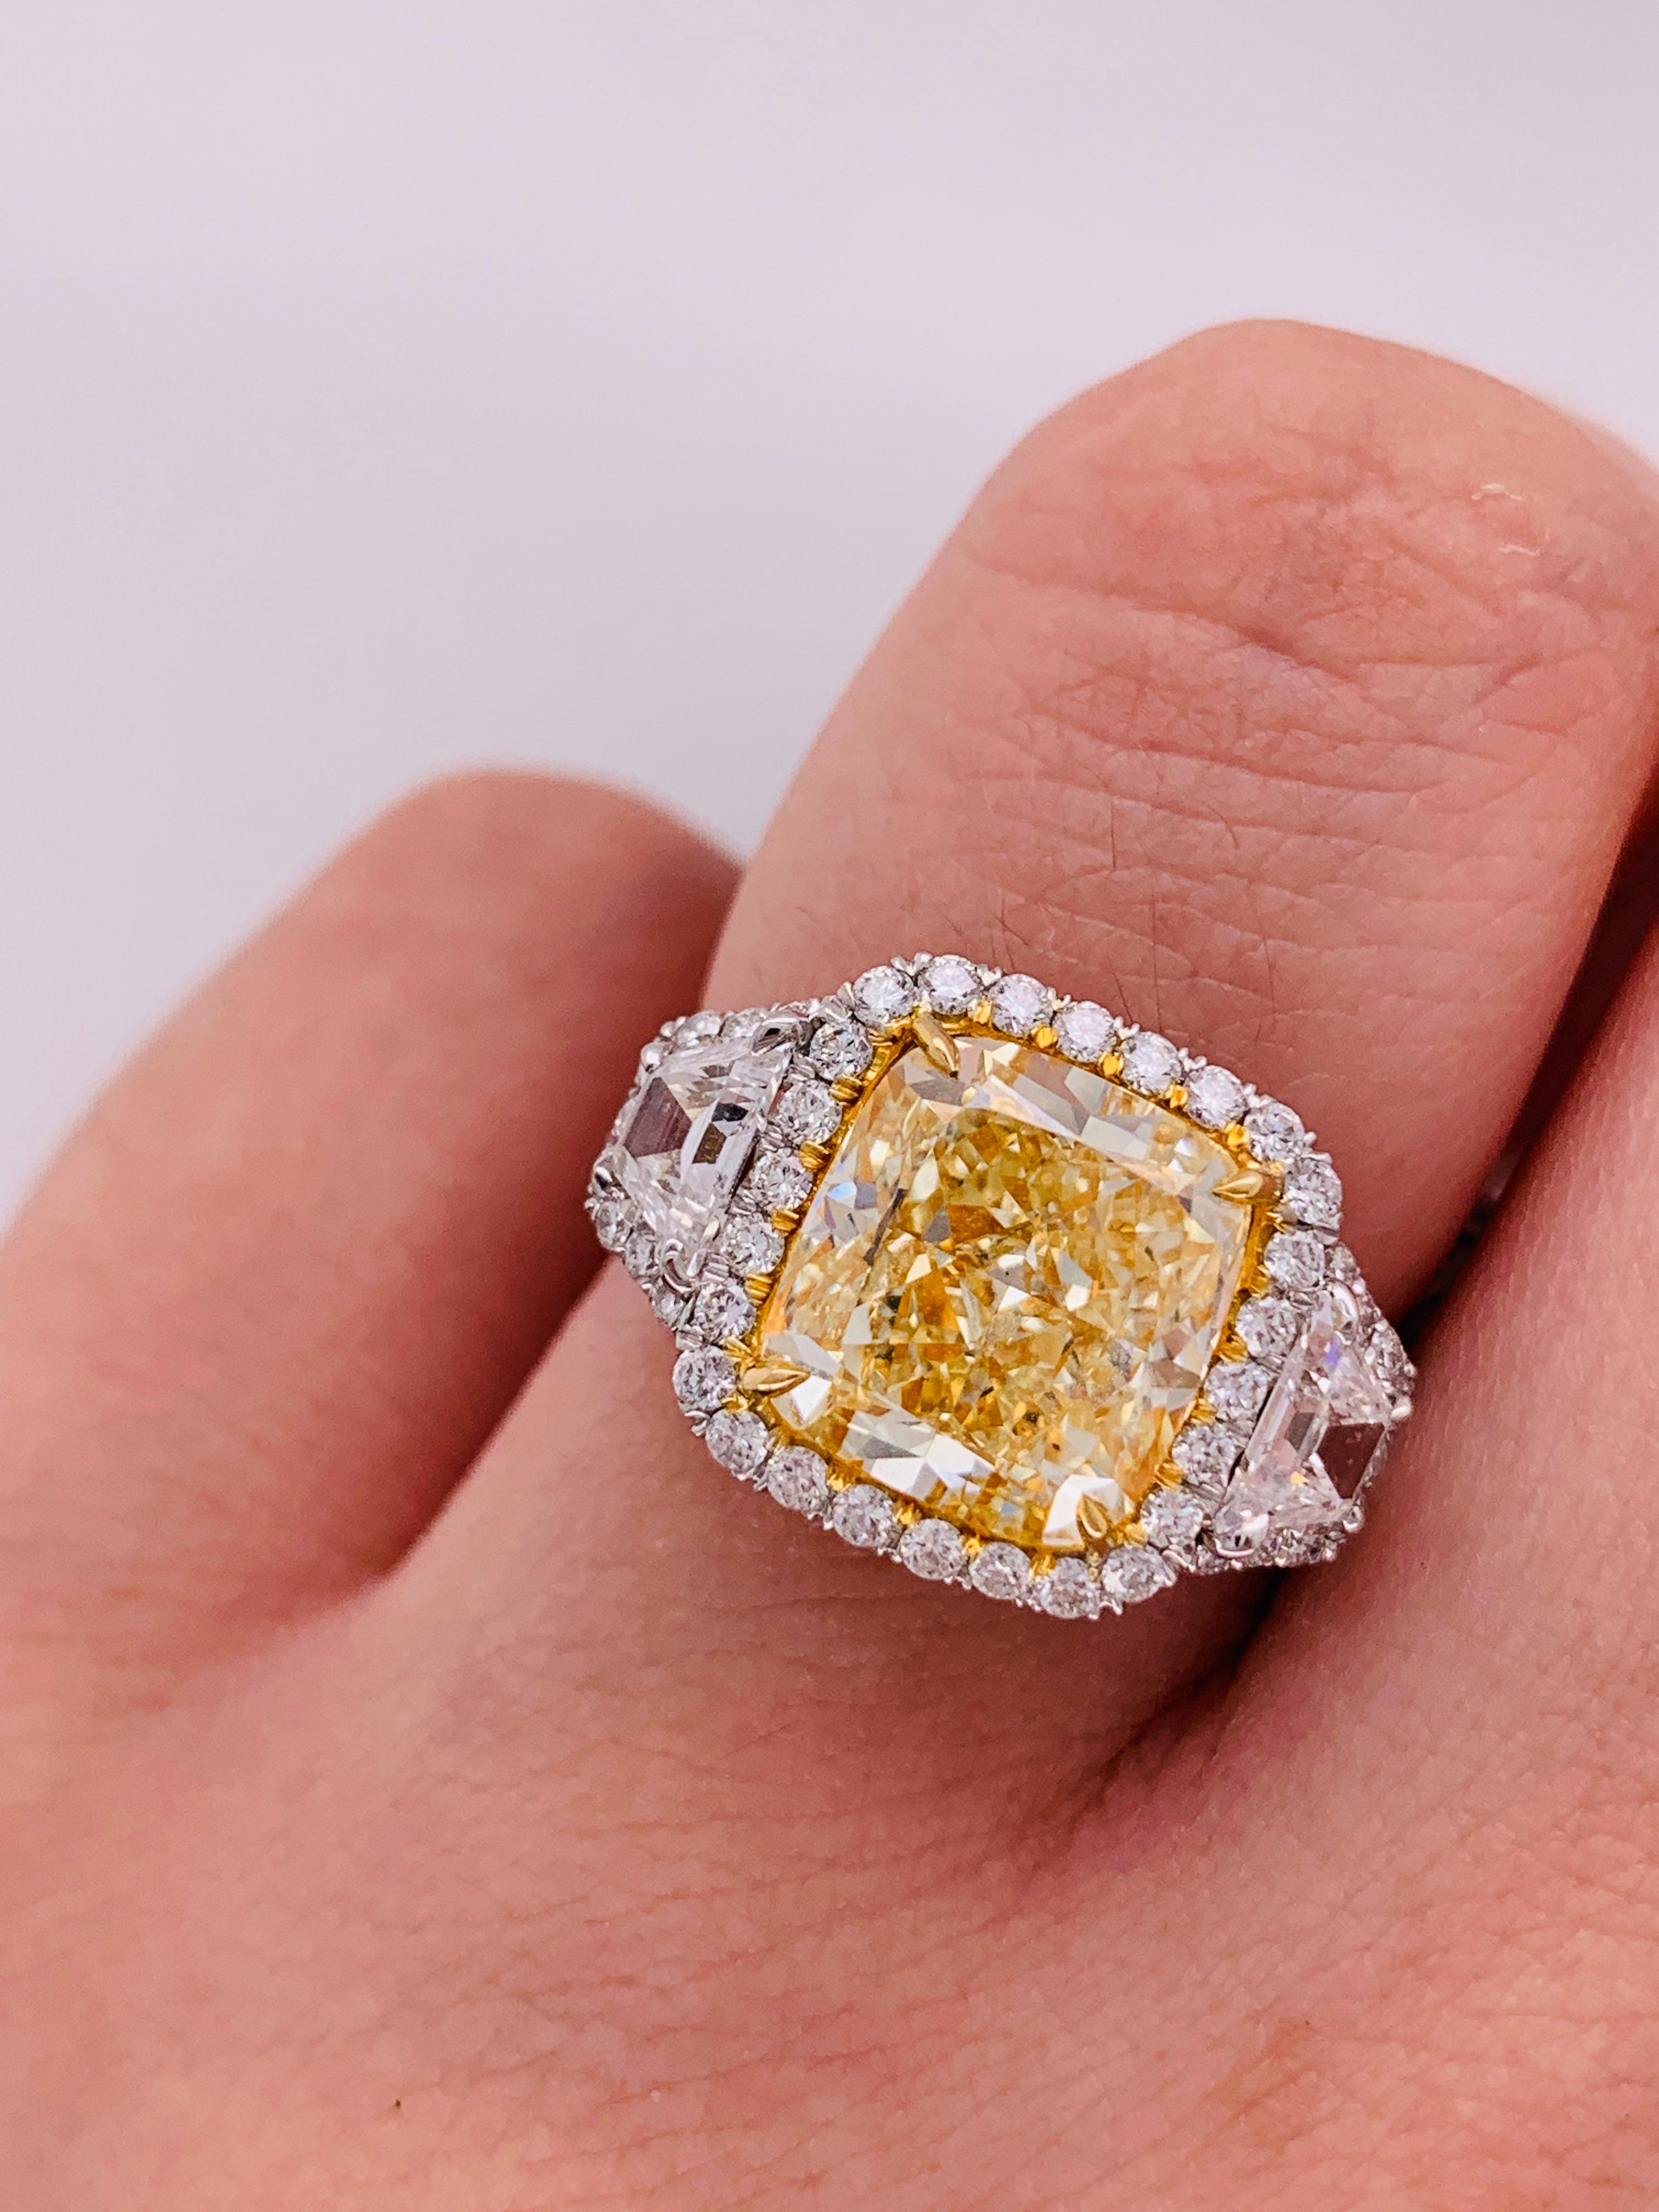 7 carat canary yellow diamond ring